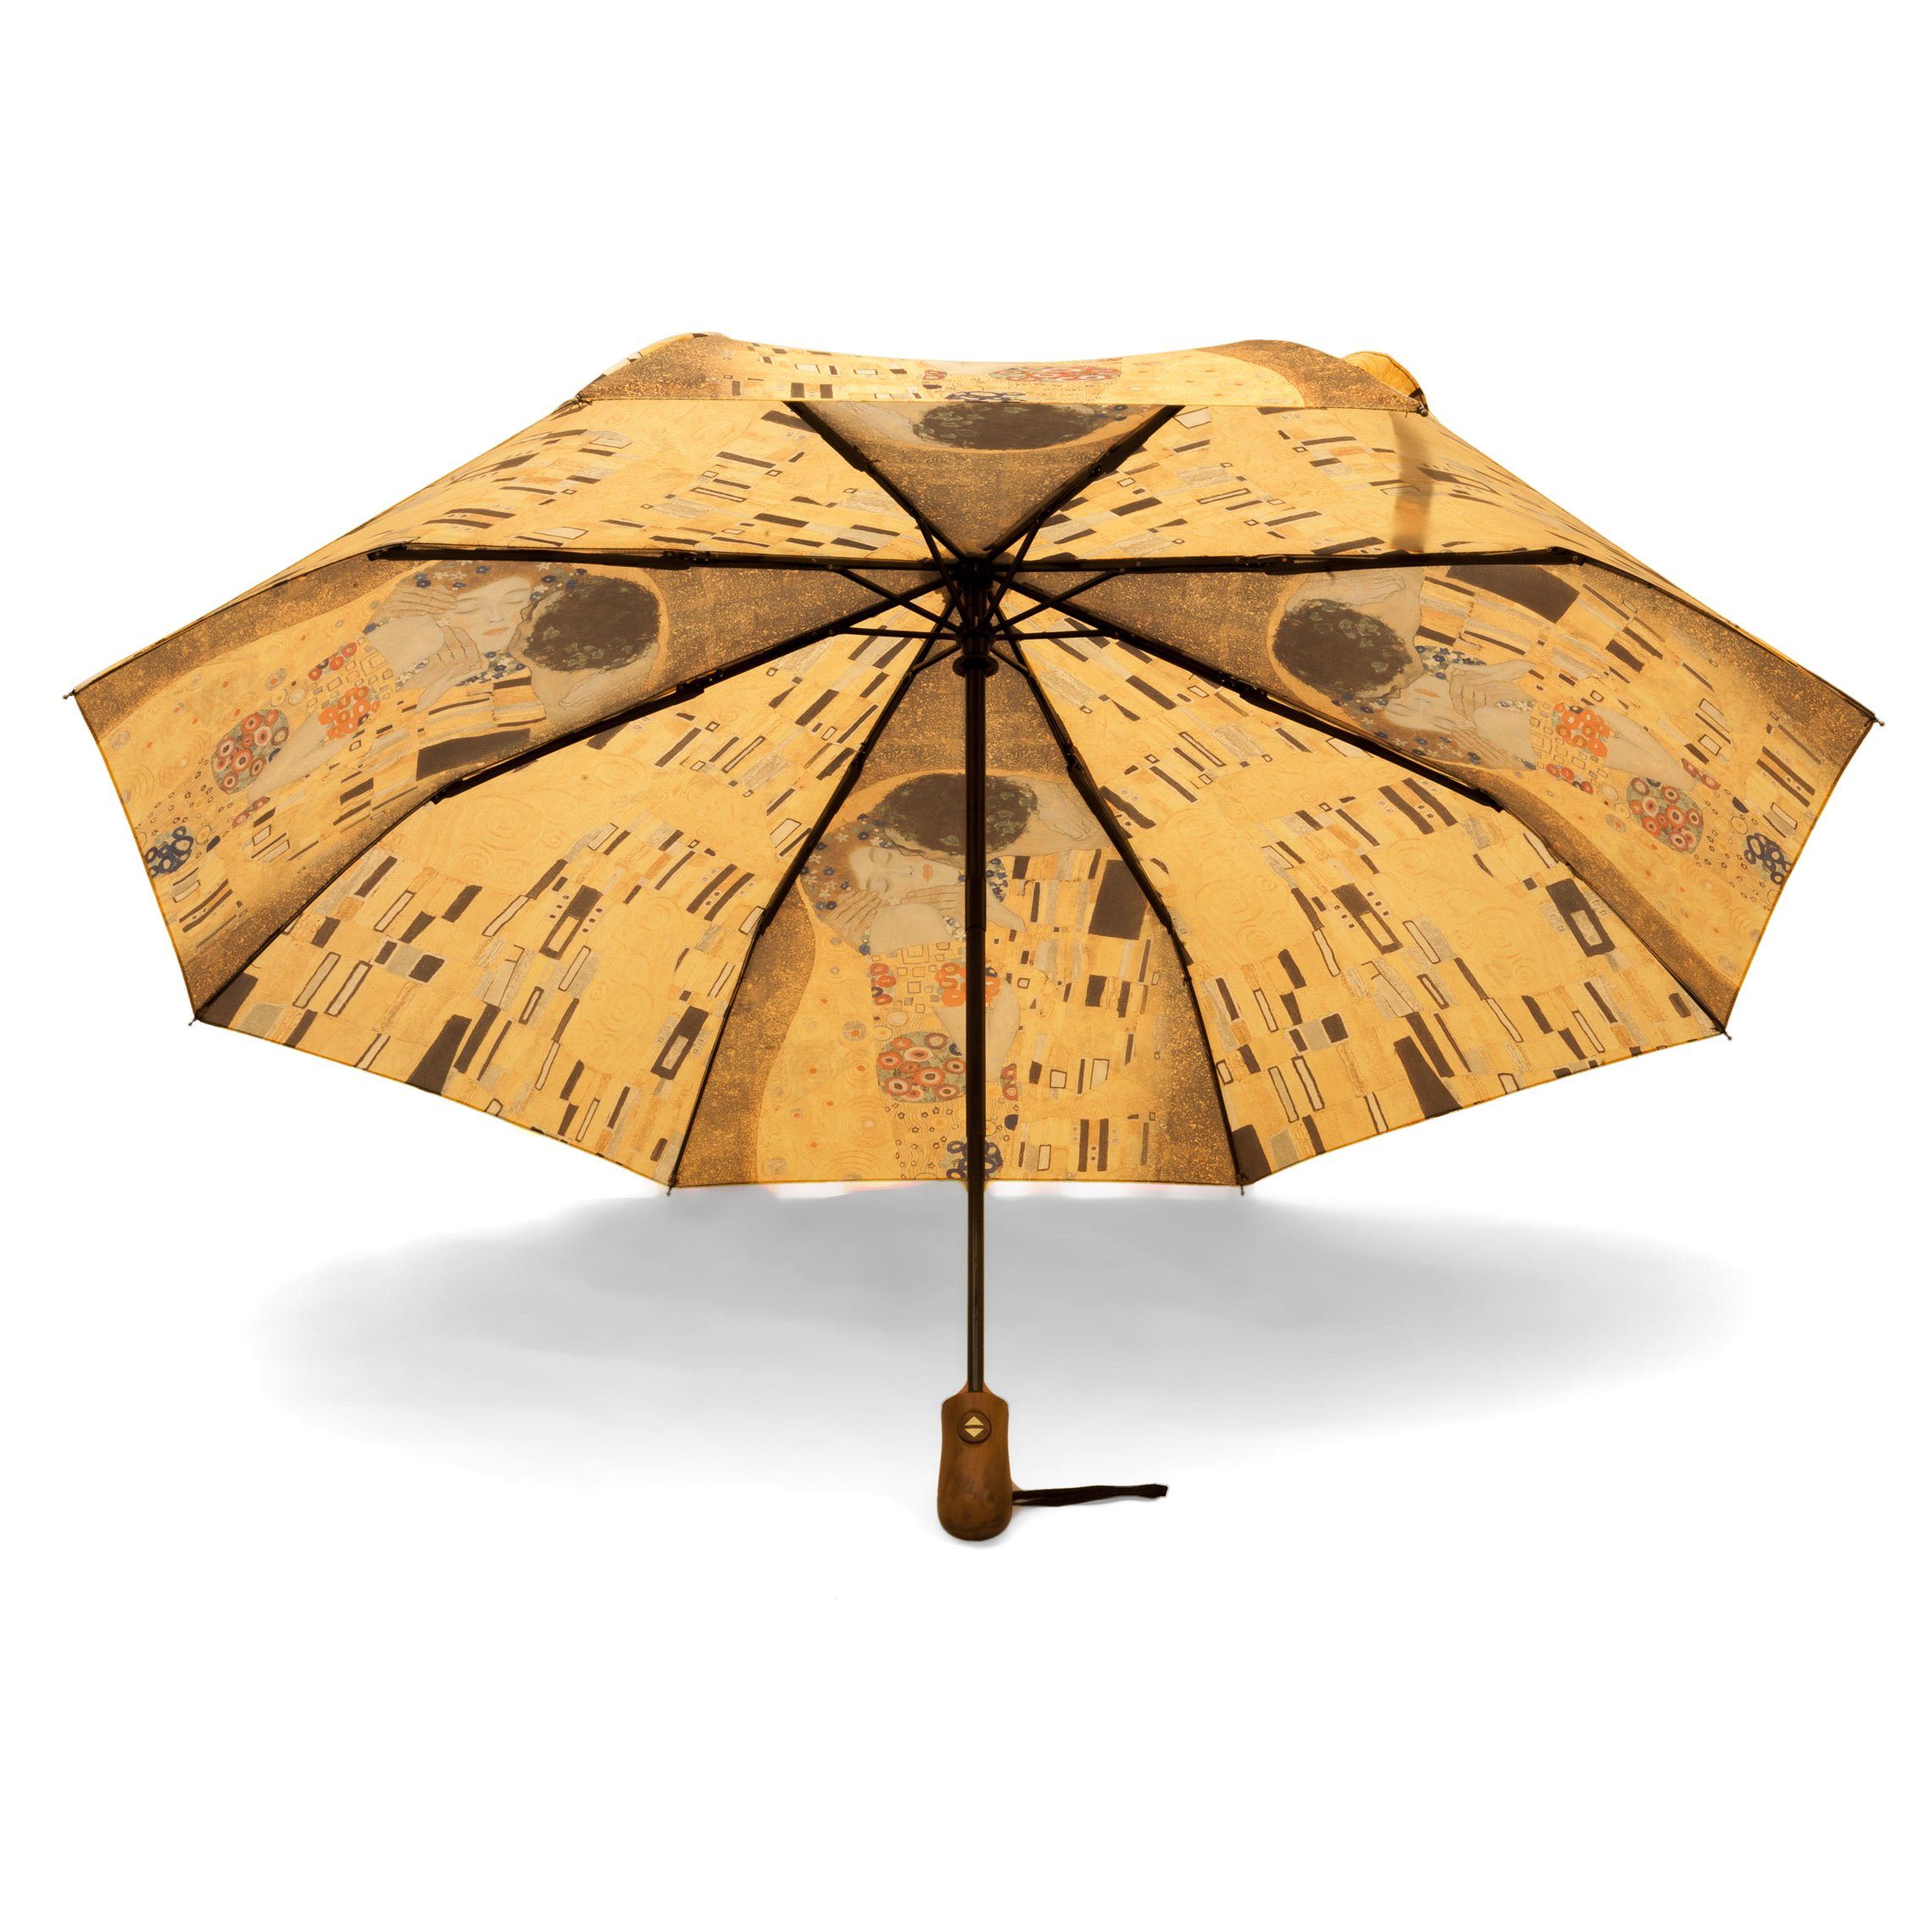 Damen Regenschirme ROSEMARIE SCHULZ Heidelberg Taschenregenschirm Taschenschirm Automatik Regenschirm Kunst Gustav Klimt Kuss, A